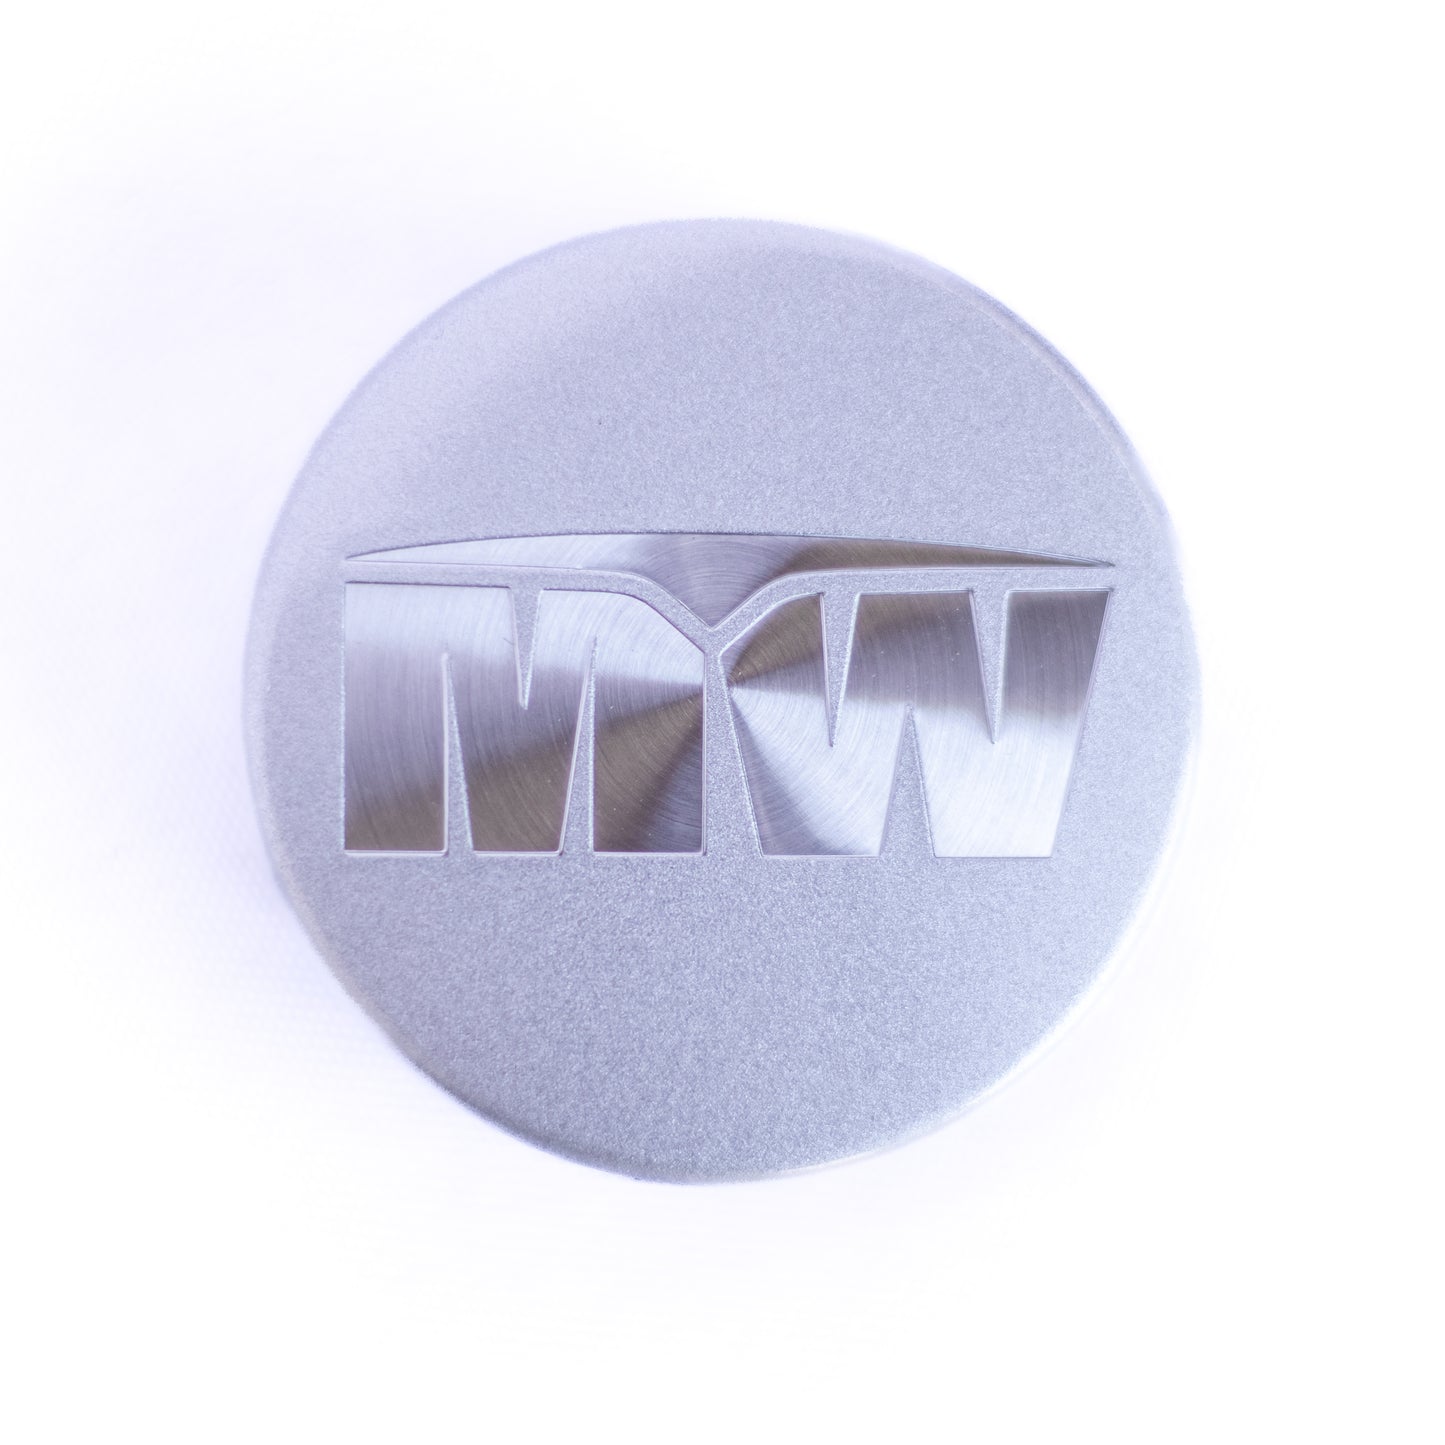 Capuchon central - Logo MW en aluminium brossé (simple)